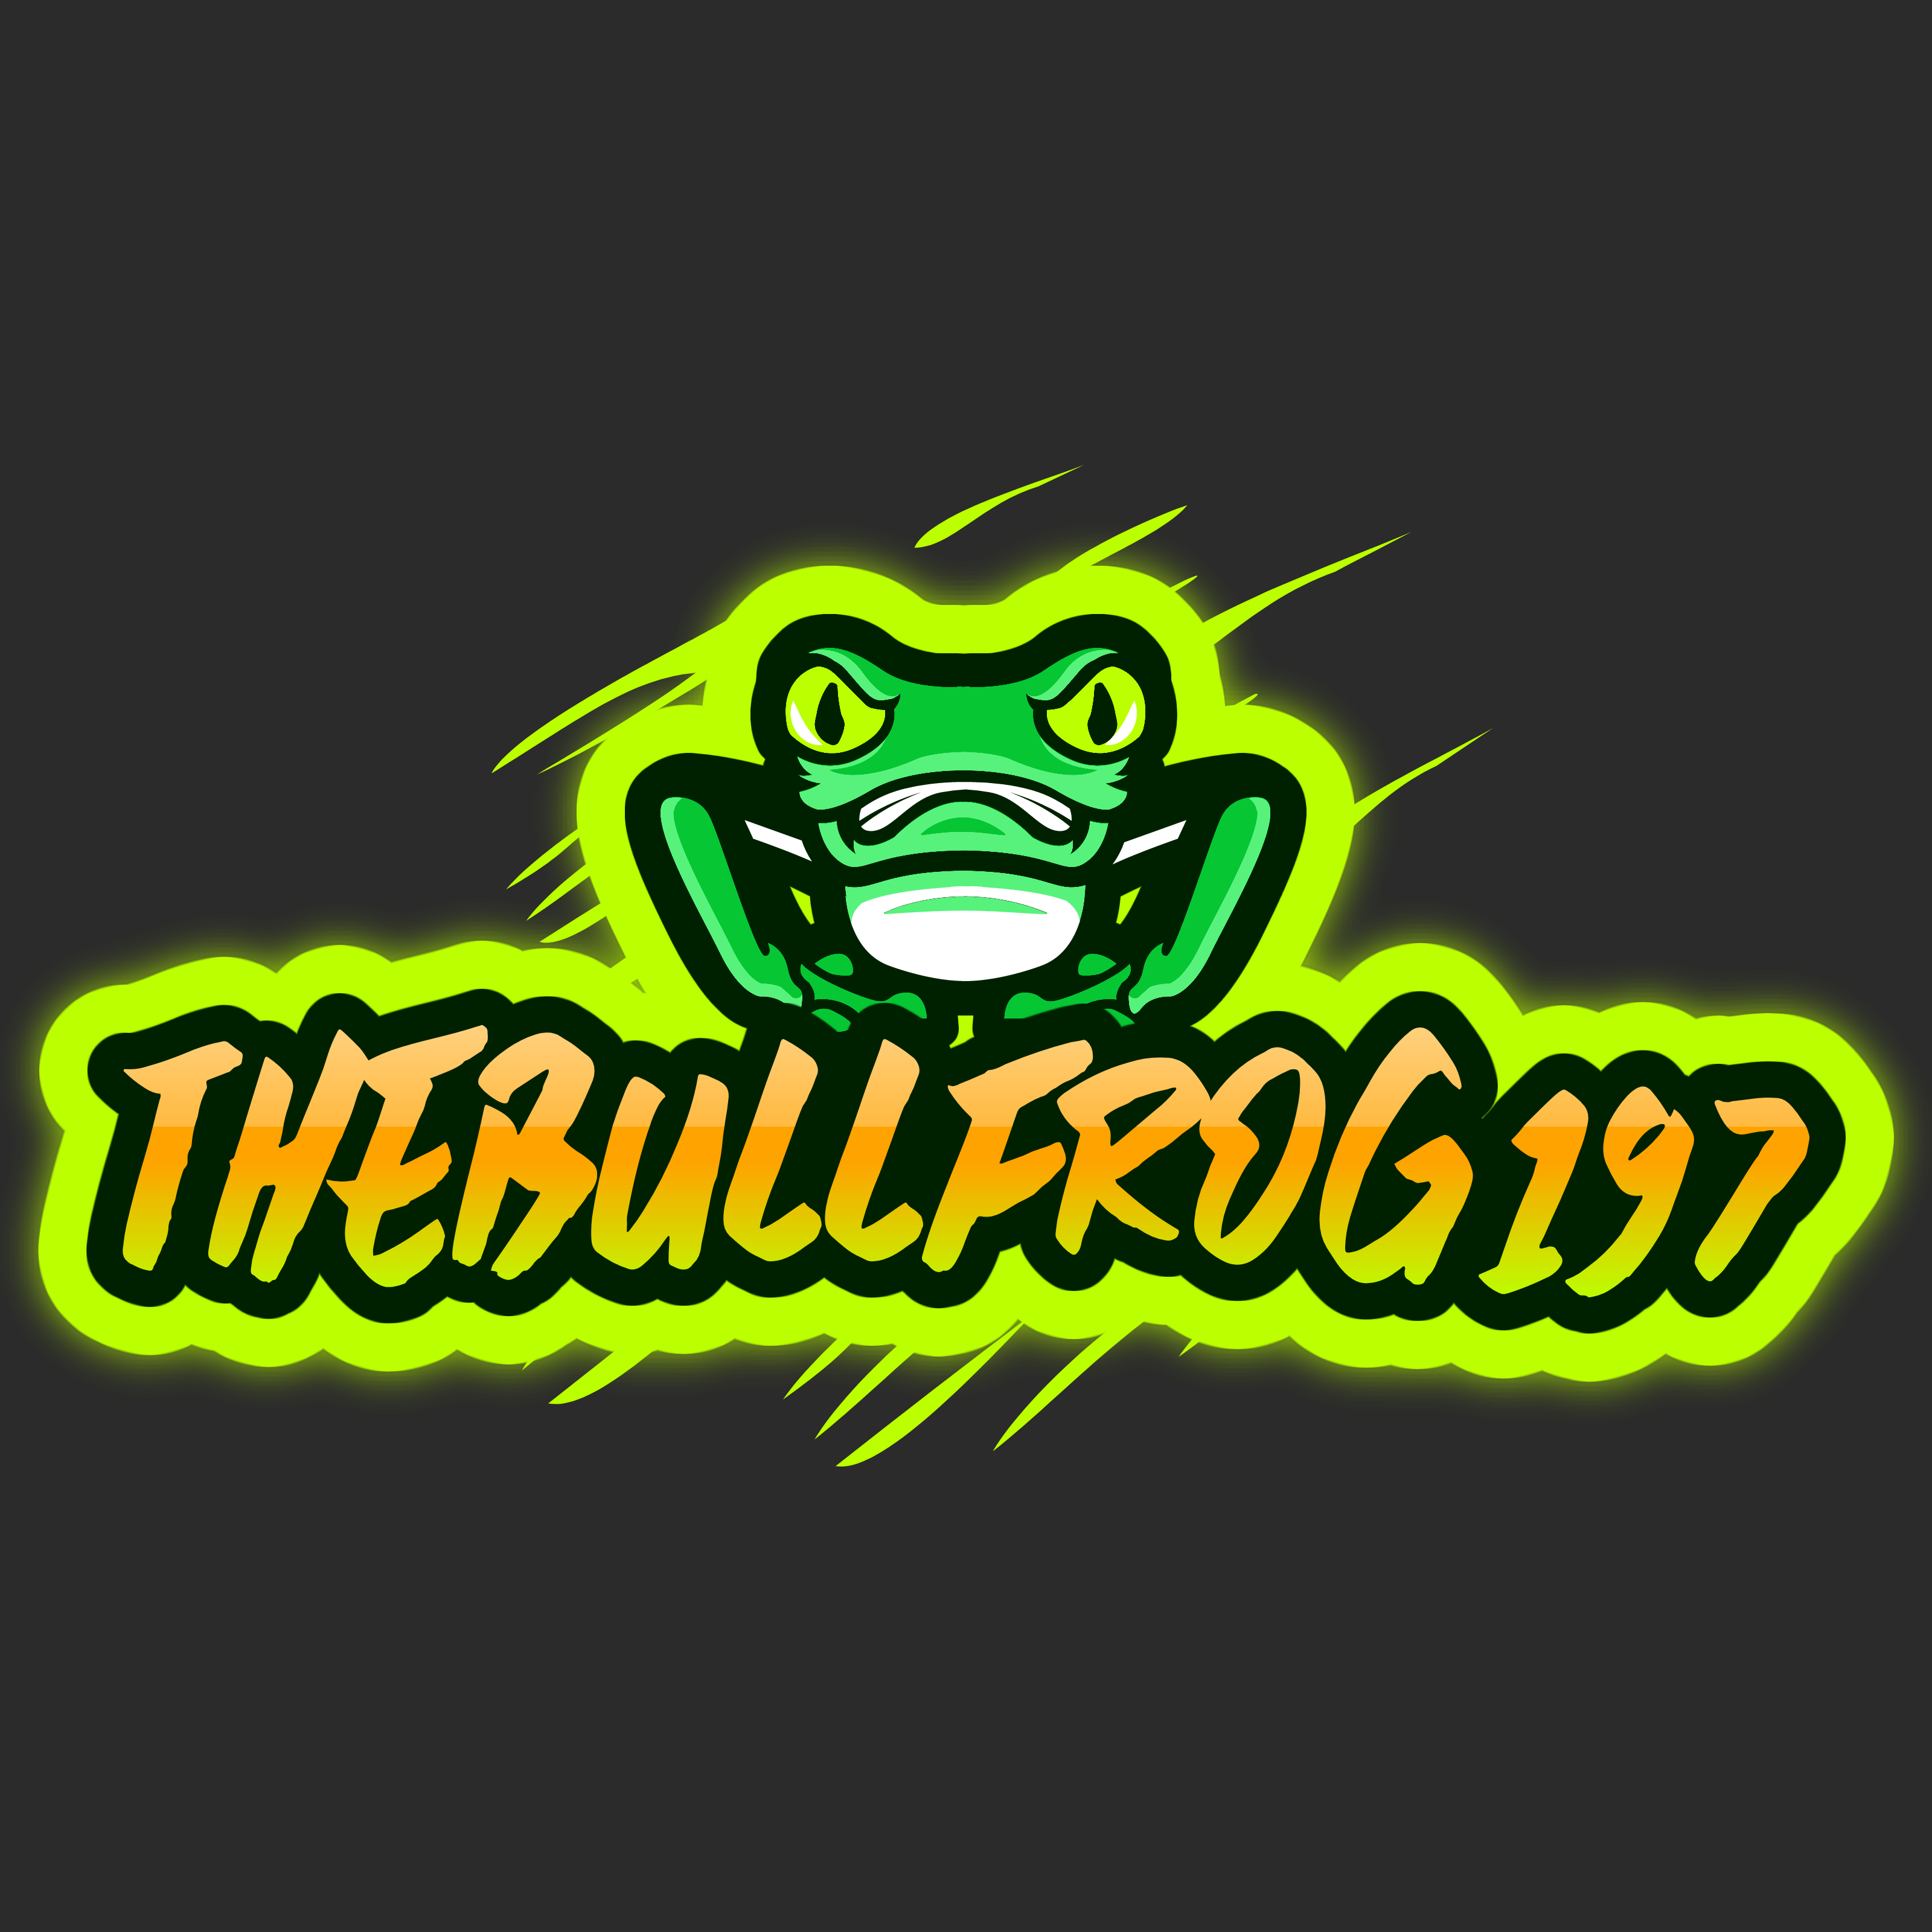 thebullfrog197